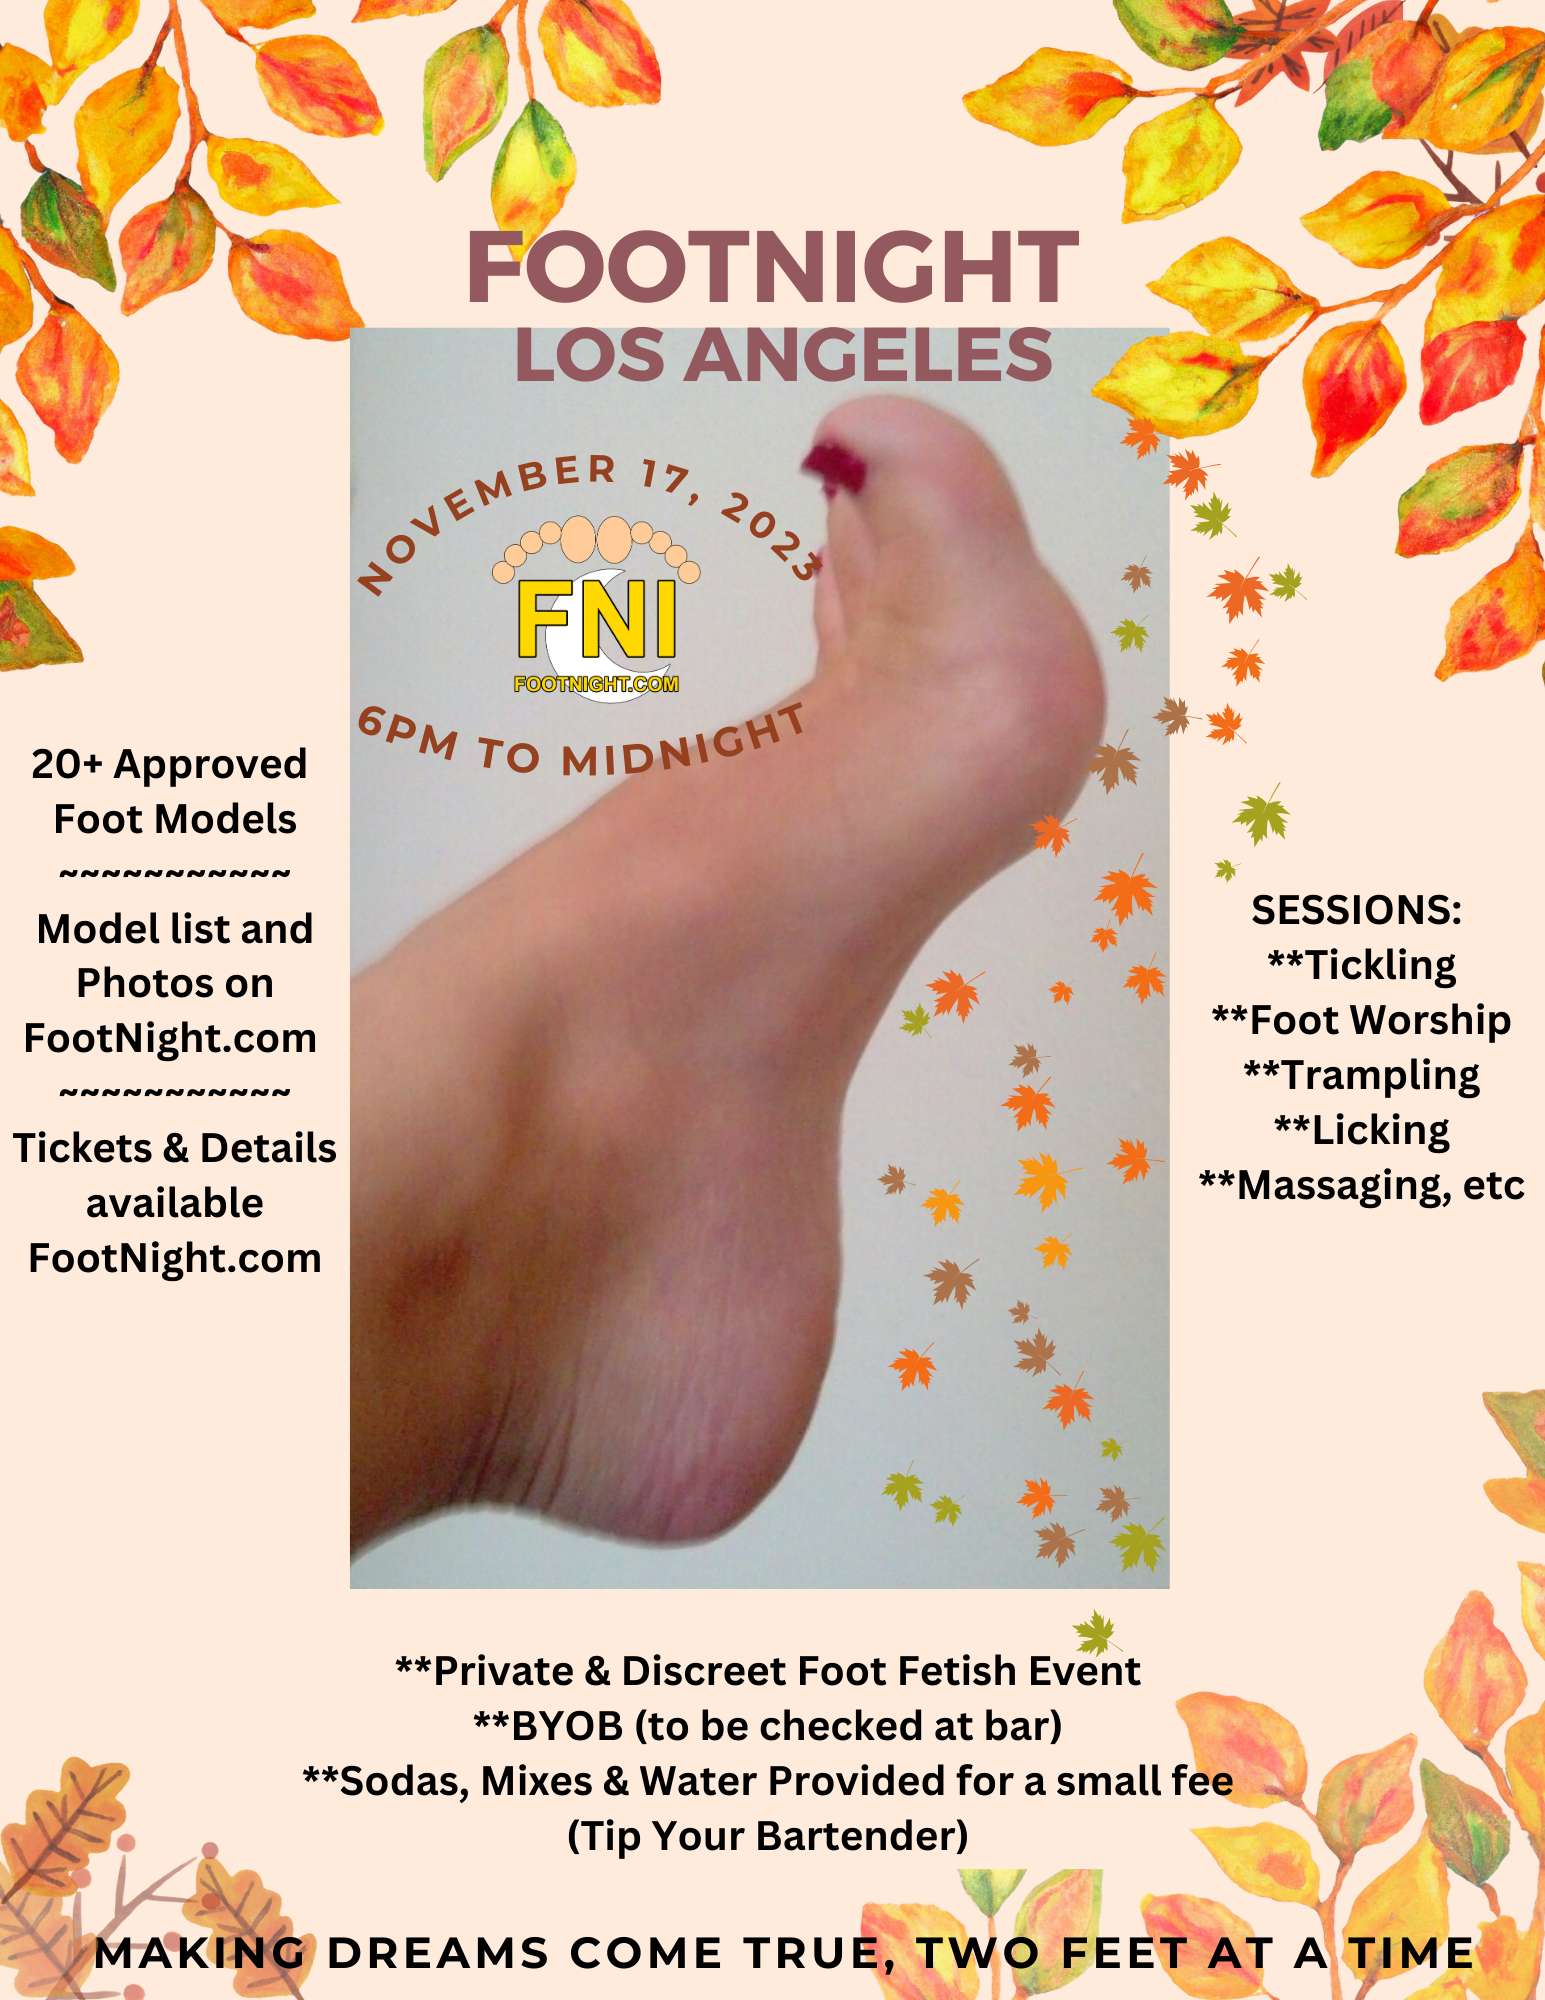 FootNight.com